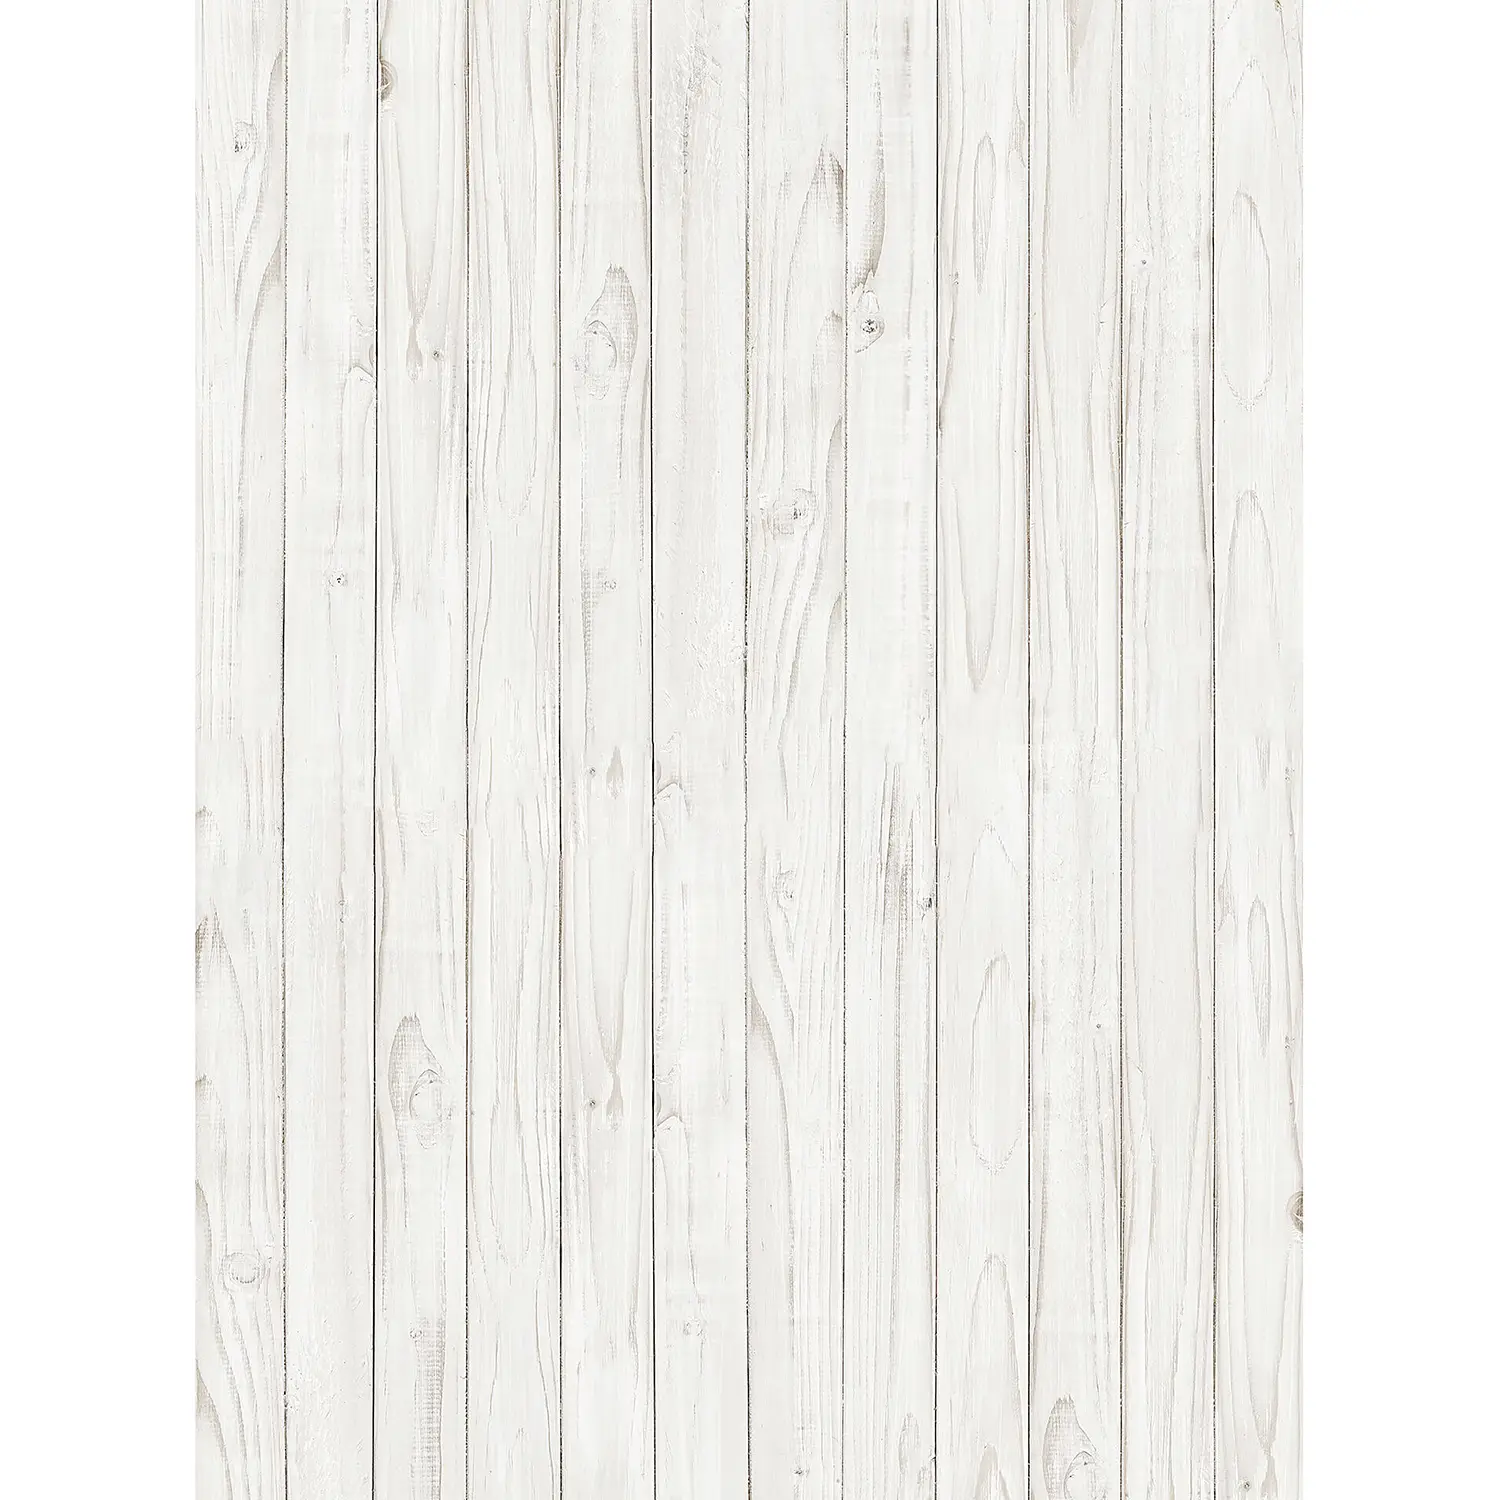 Wall Holz Fototapete Wooden